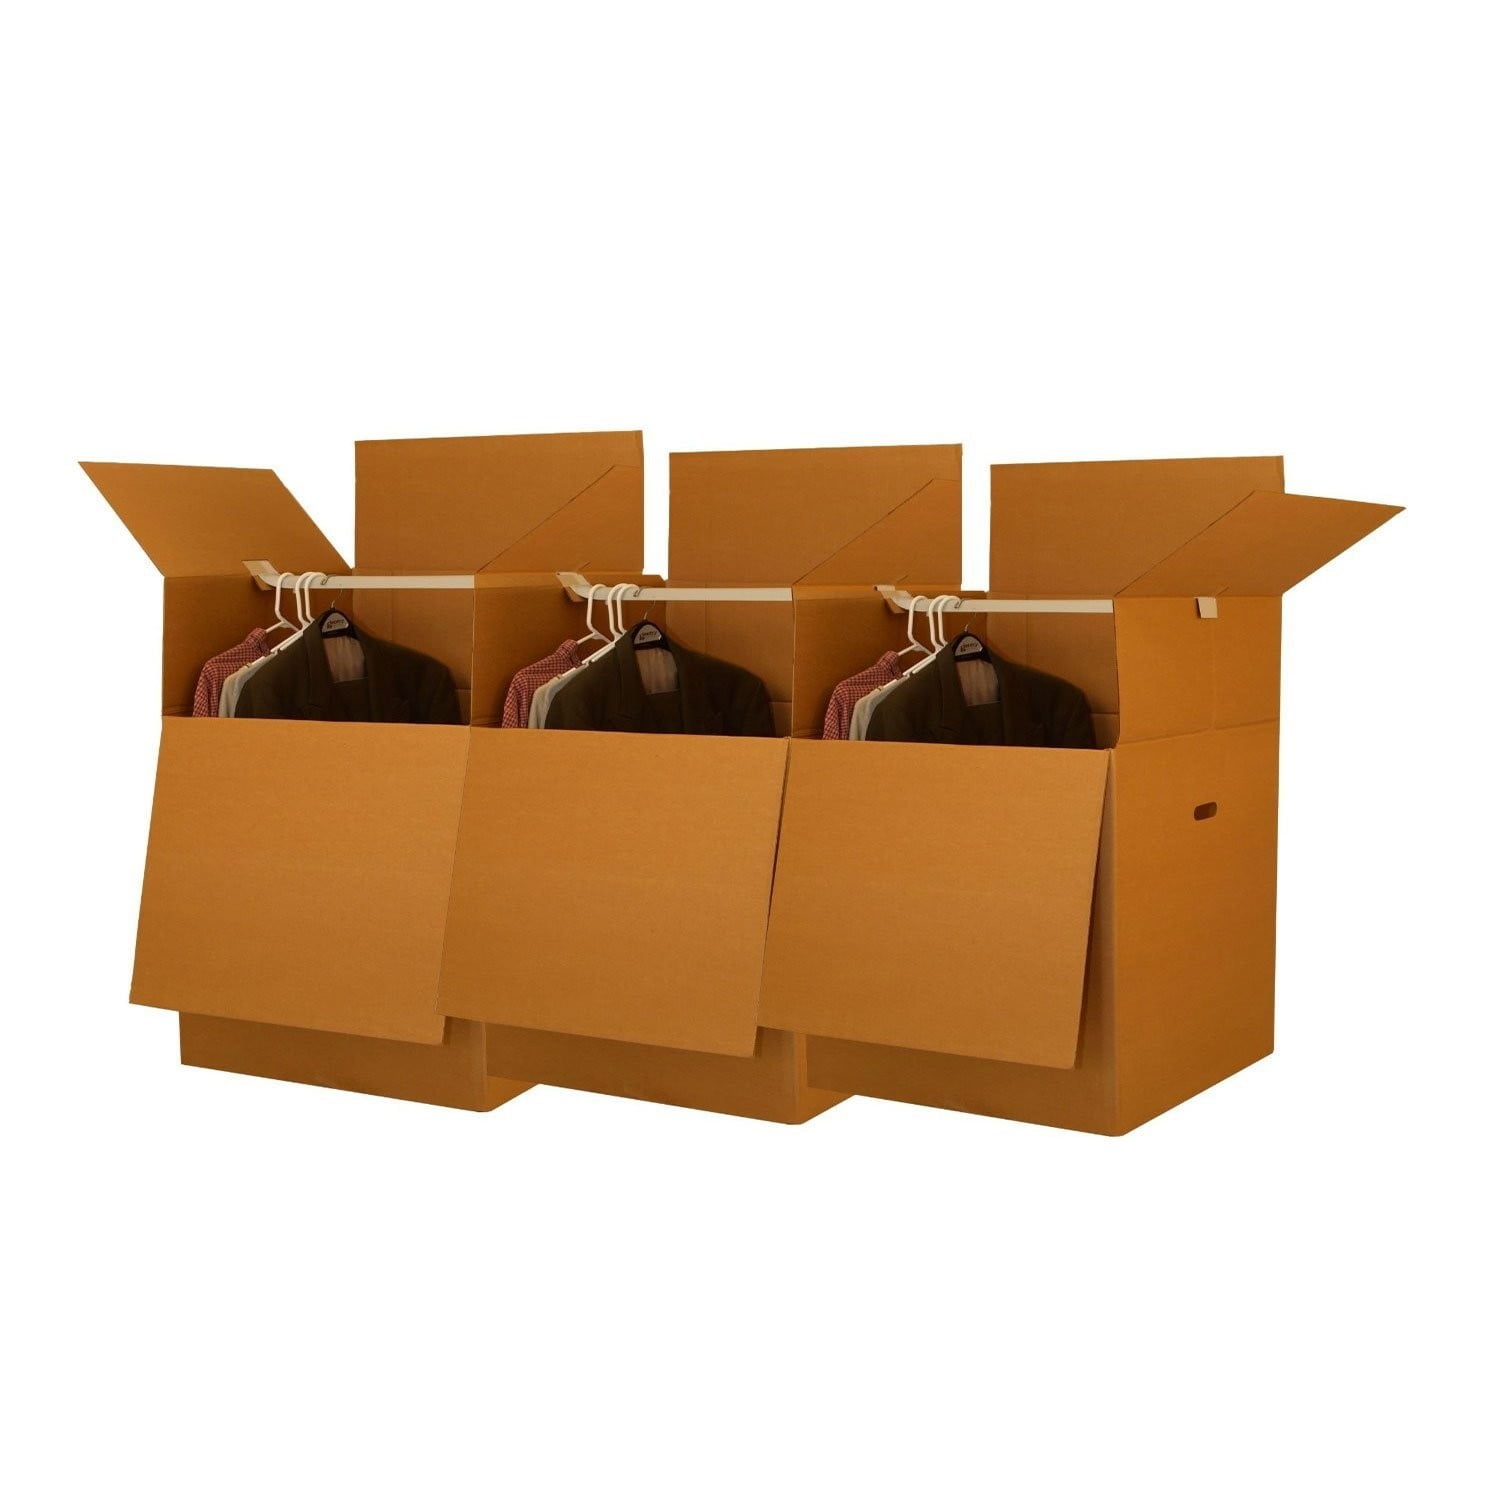 Uboxes Wardrobe Moving Boxes - Shorty Space Savers - (3 PK) 20x20x34 W/Bars